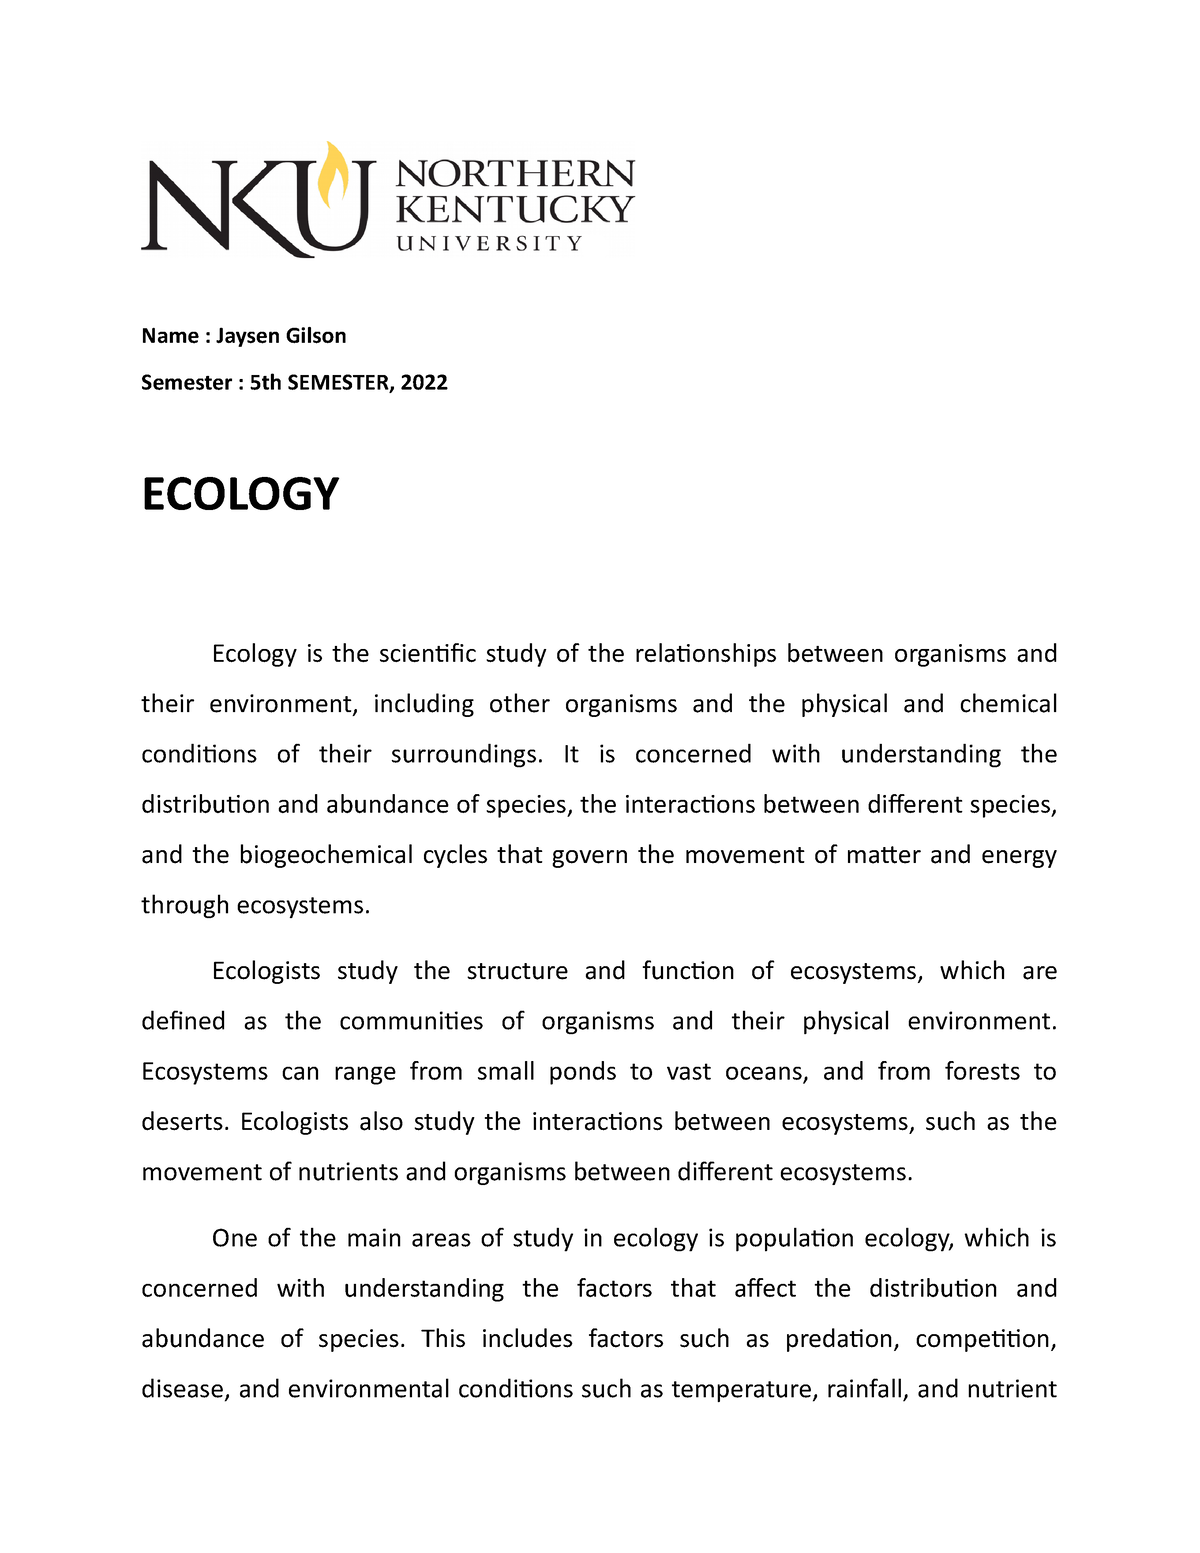 ecology conclusion essay